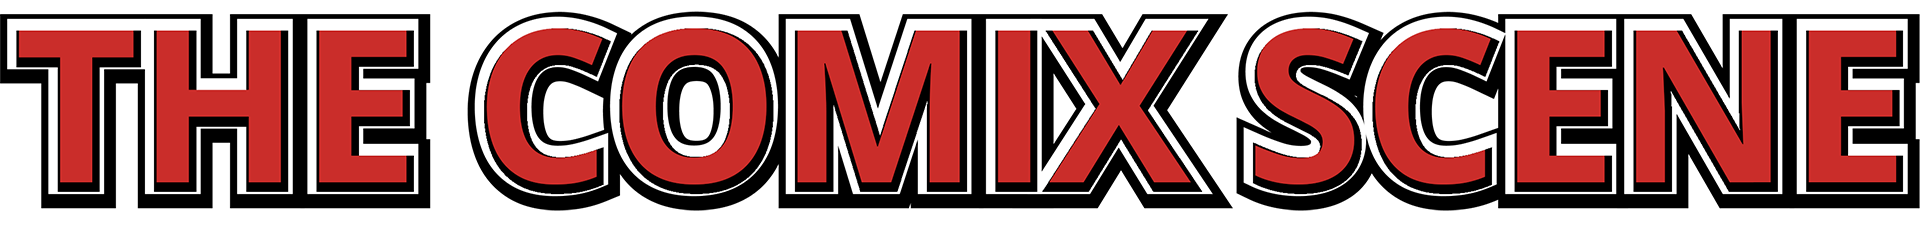 Logo for The Comix Scene.